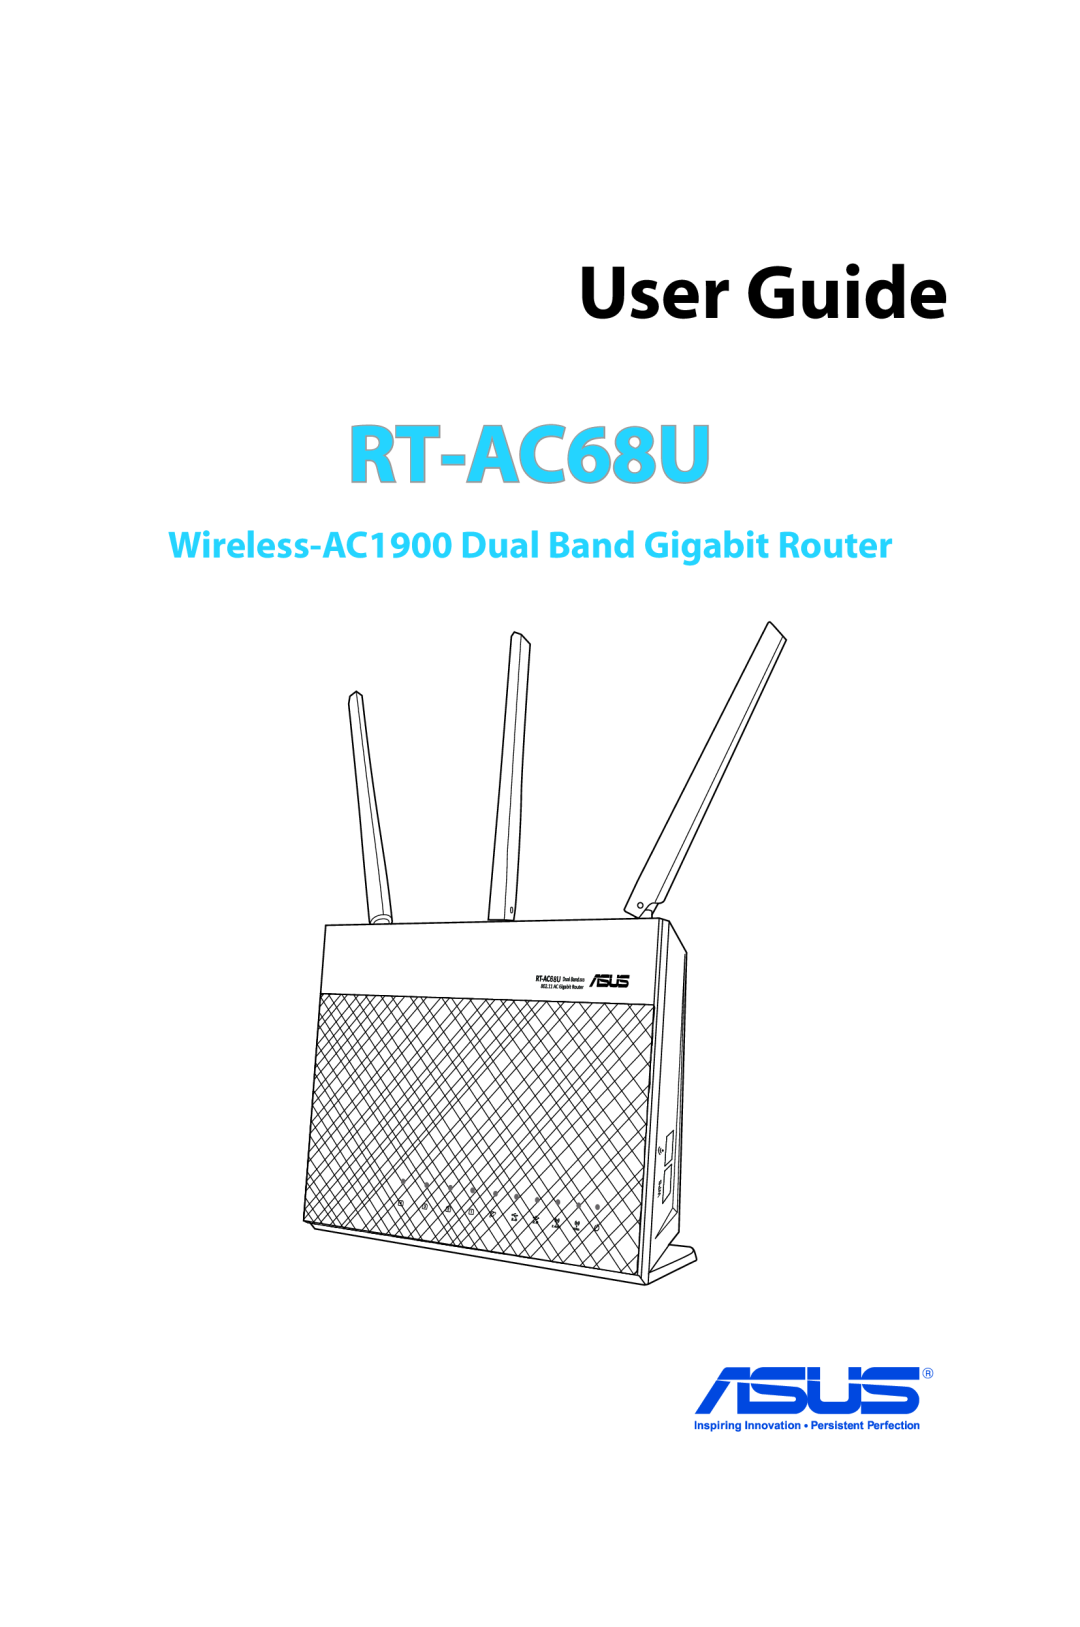 Asus RTAC68U manual Wireless-AC1900 Dual Band Gigabit Router, RT-AC68U, User Guide 